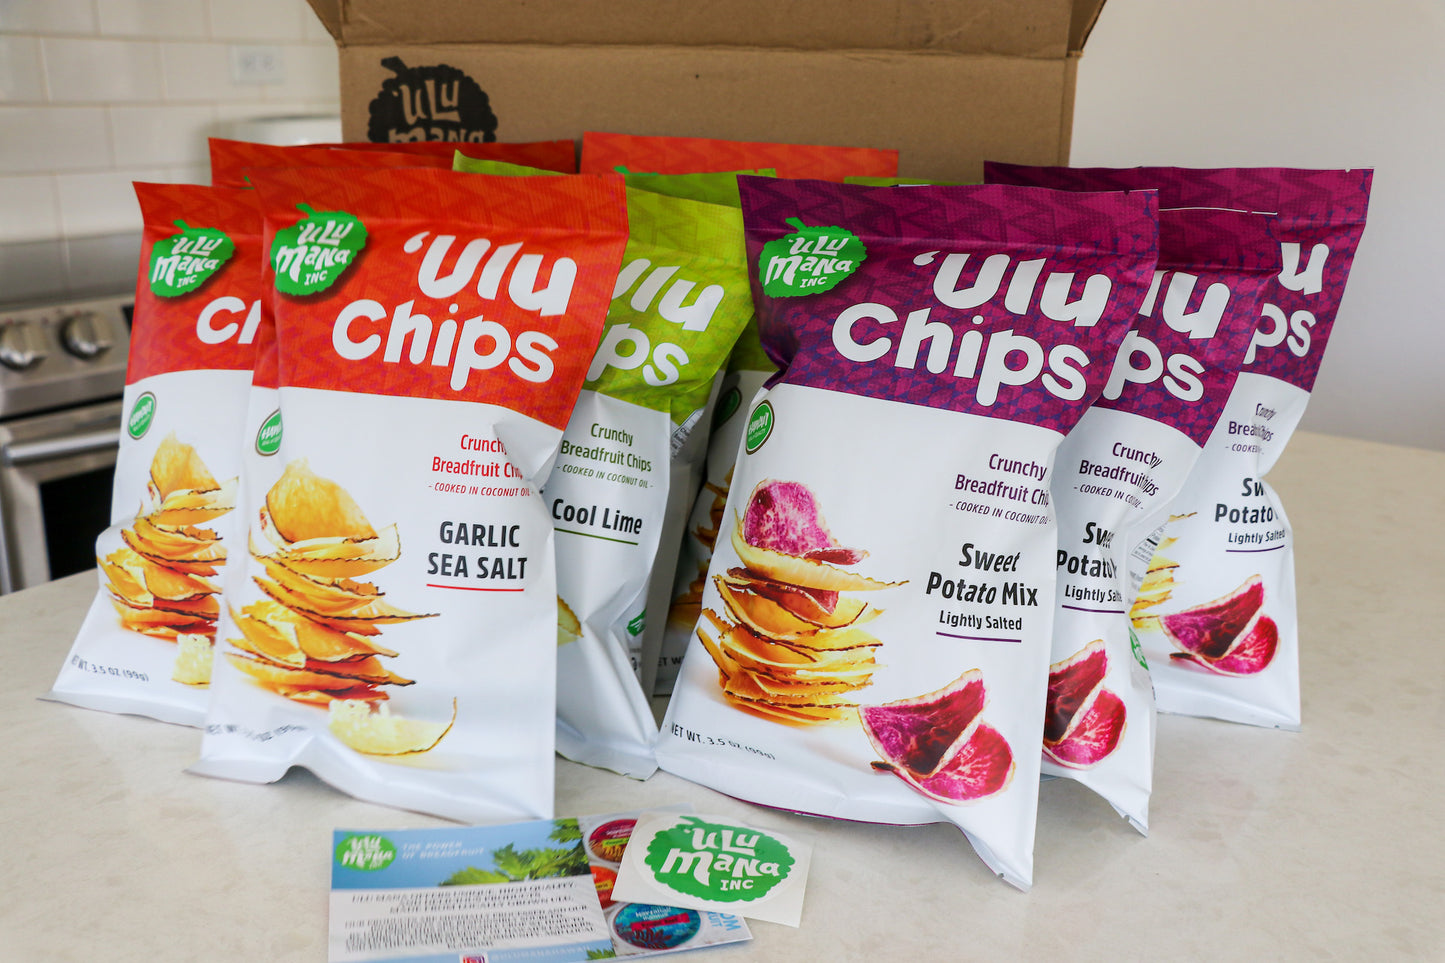 'Ulu Chips 3.5oz 12 pack